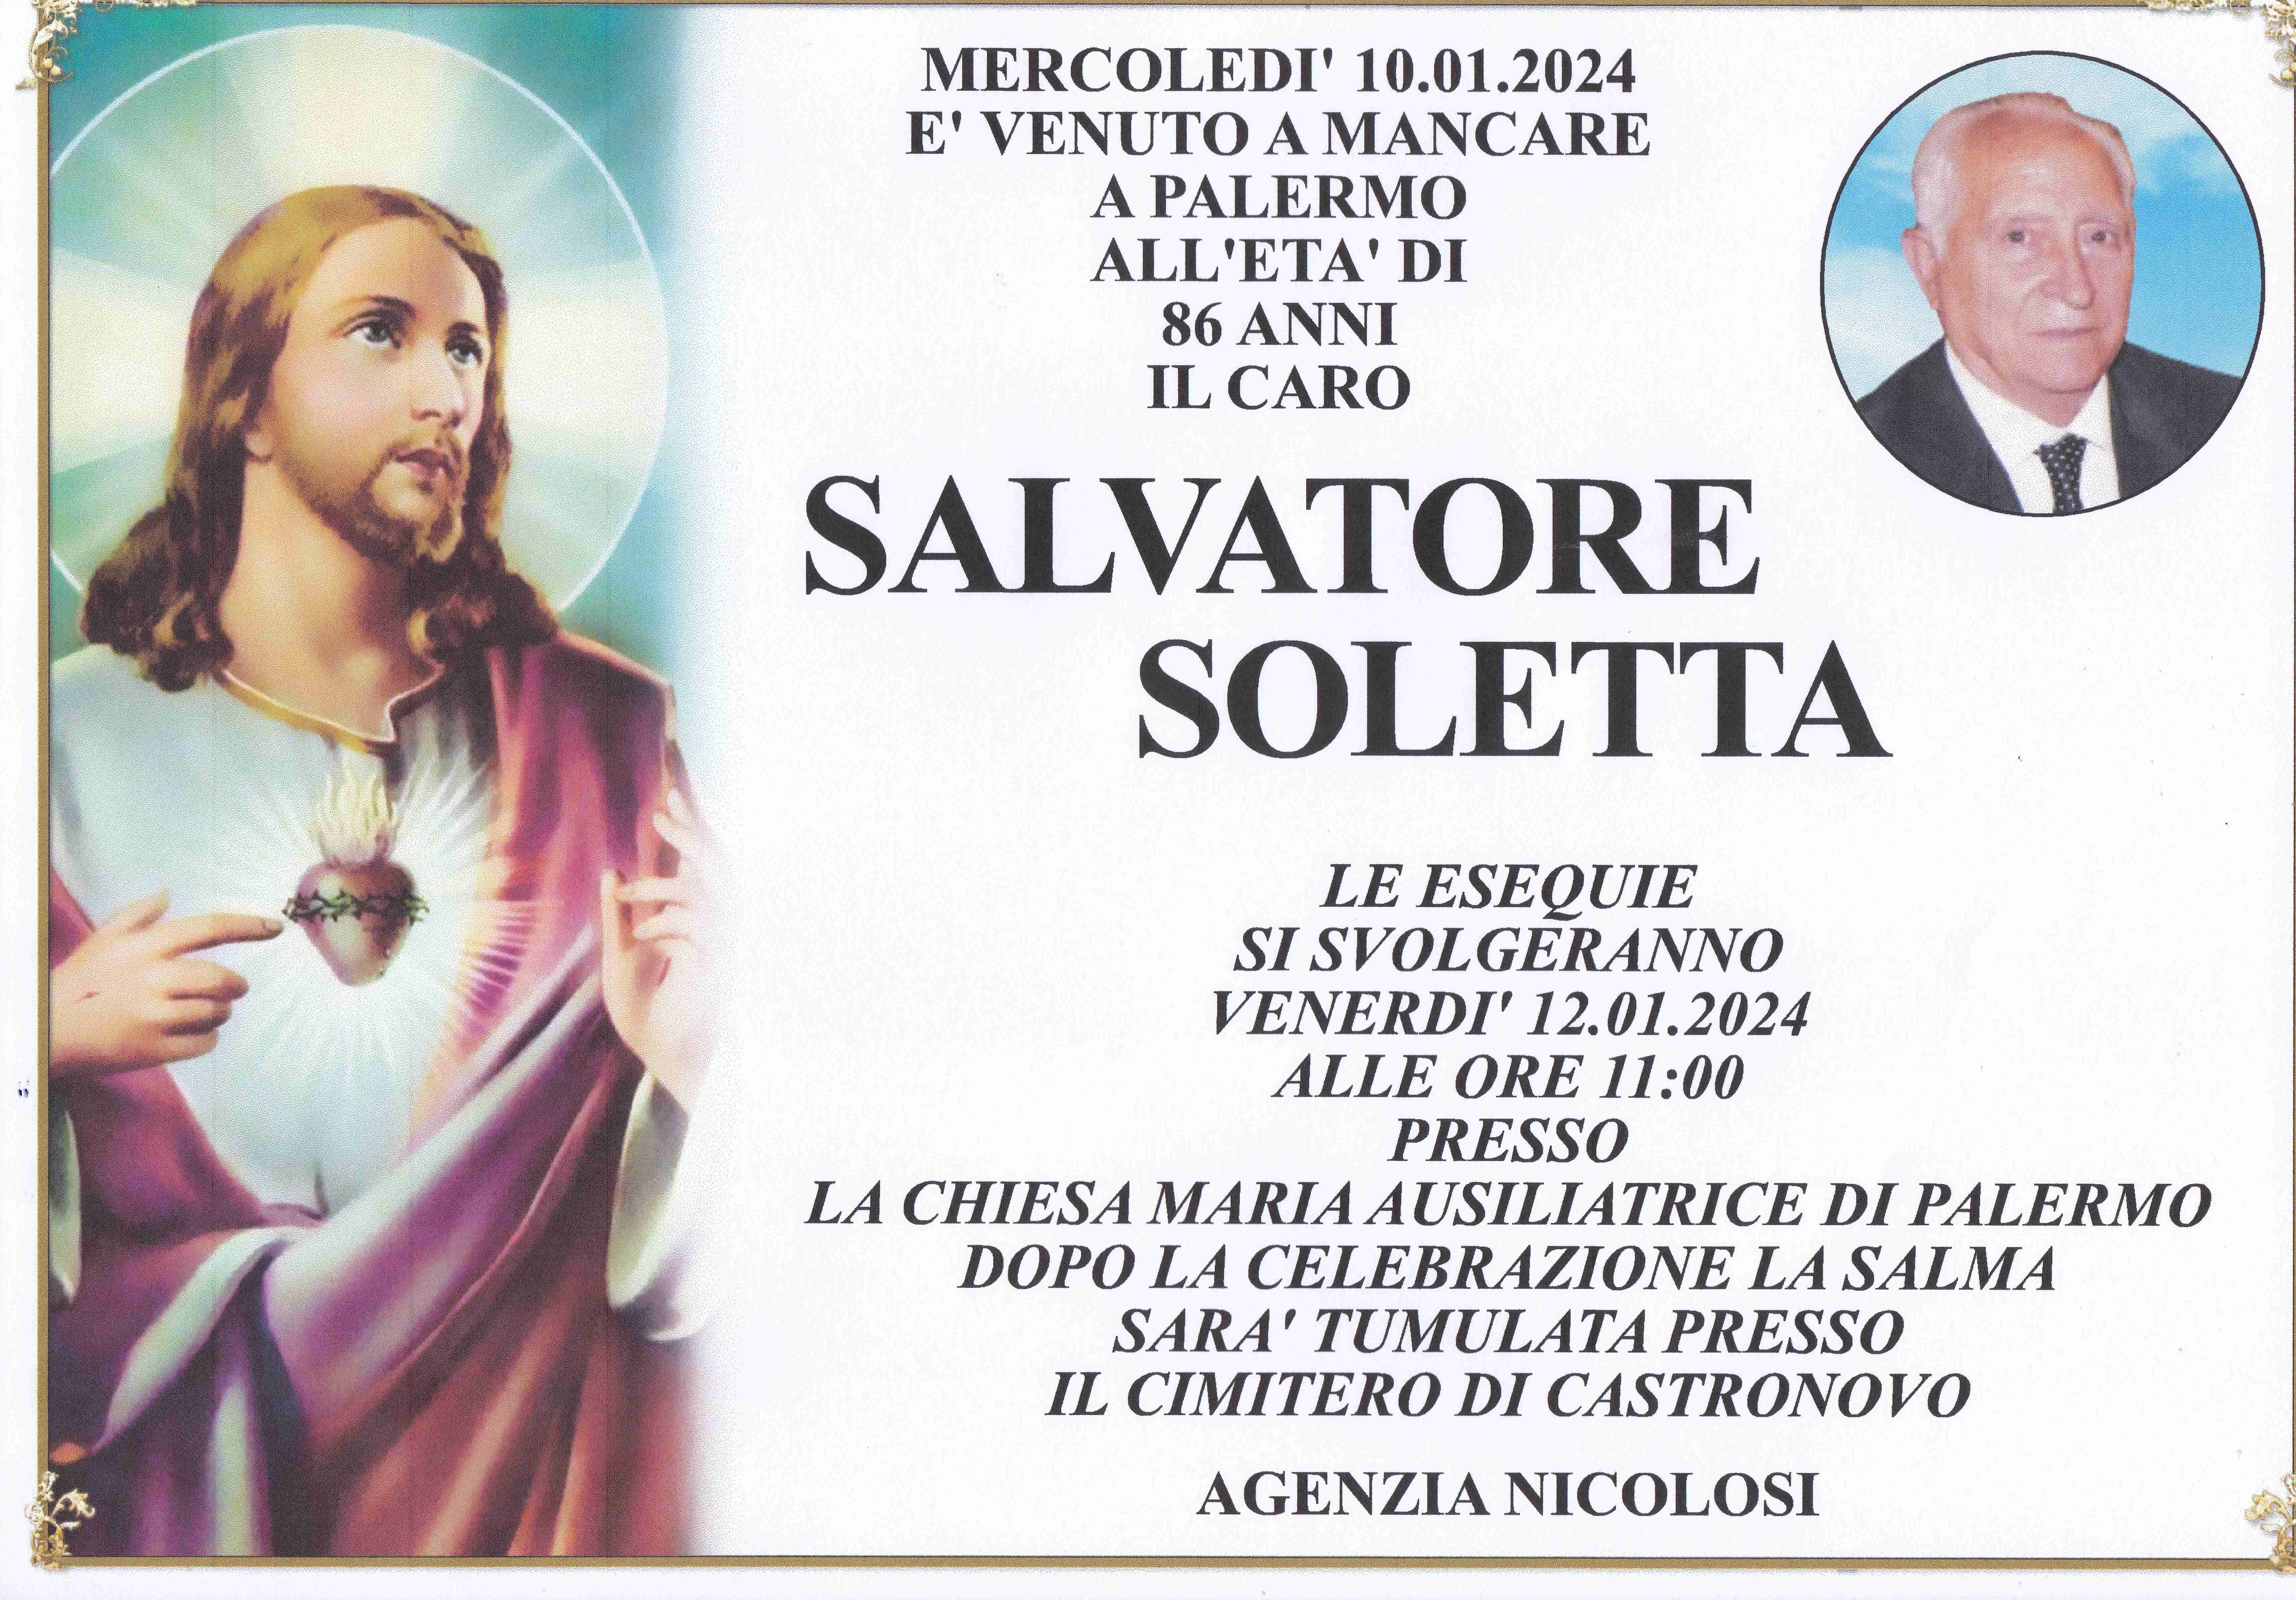 Salvatore Soletta